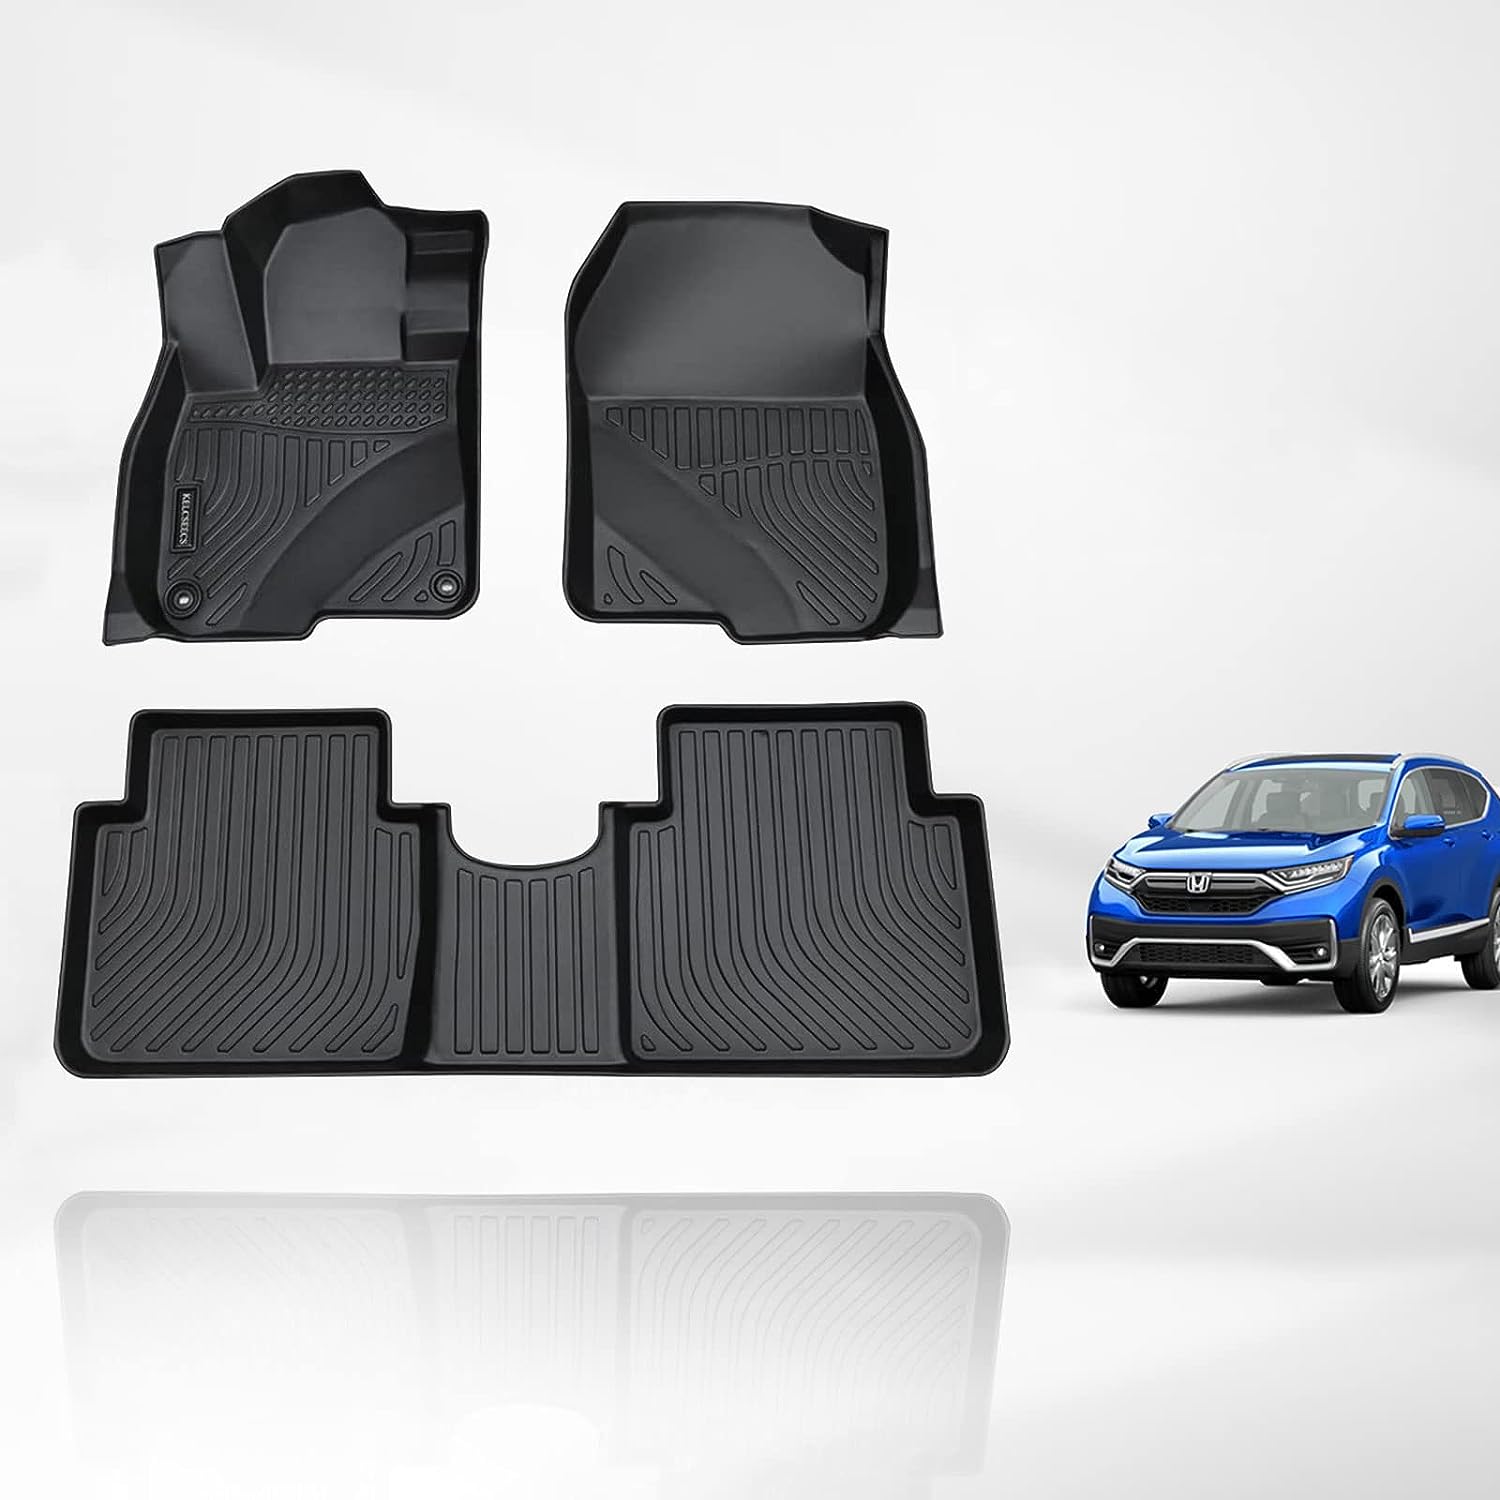 Kelcseecs All Weather 3D Tech Design TPE Car Floor Mats Floor Liners For Honda CR-V 2017-2022